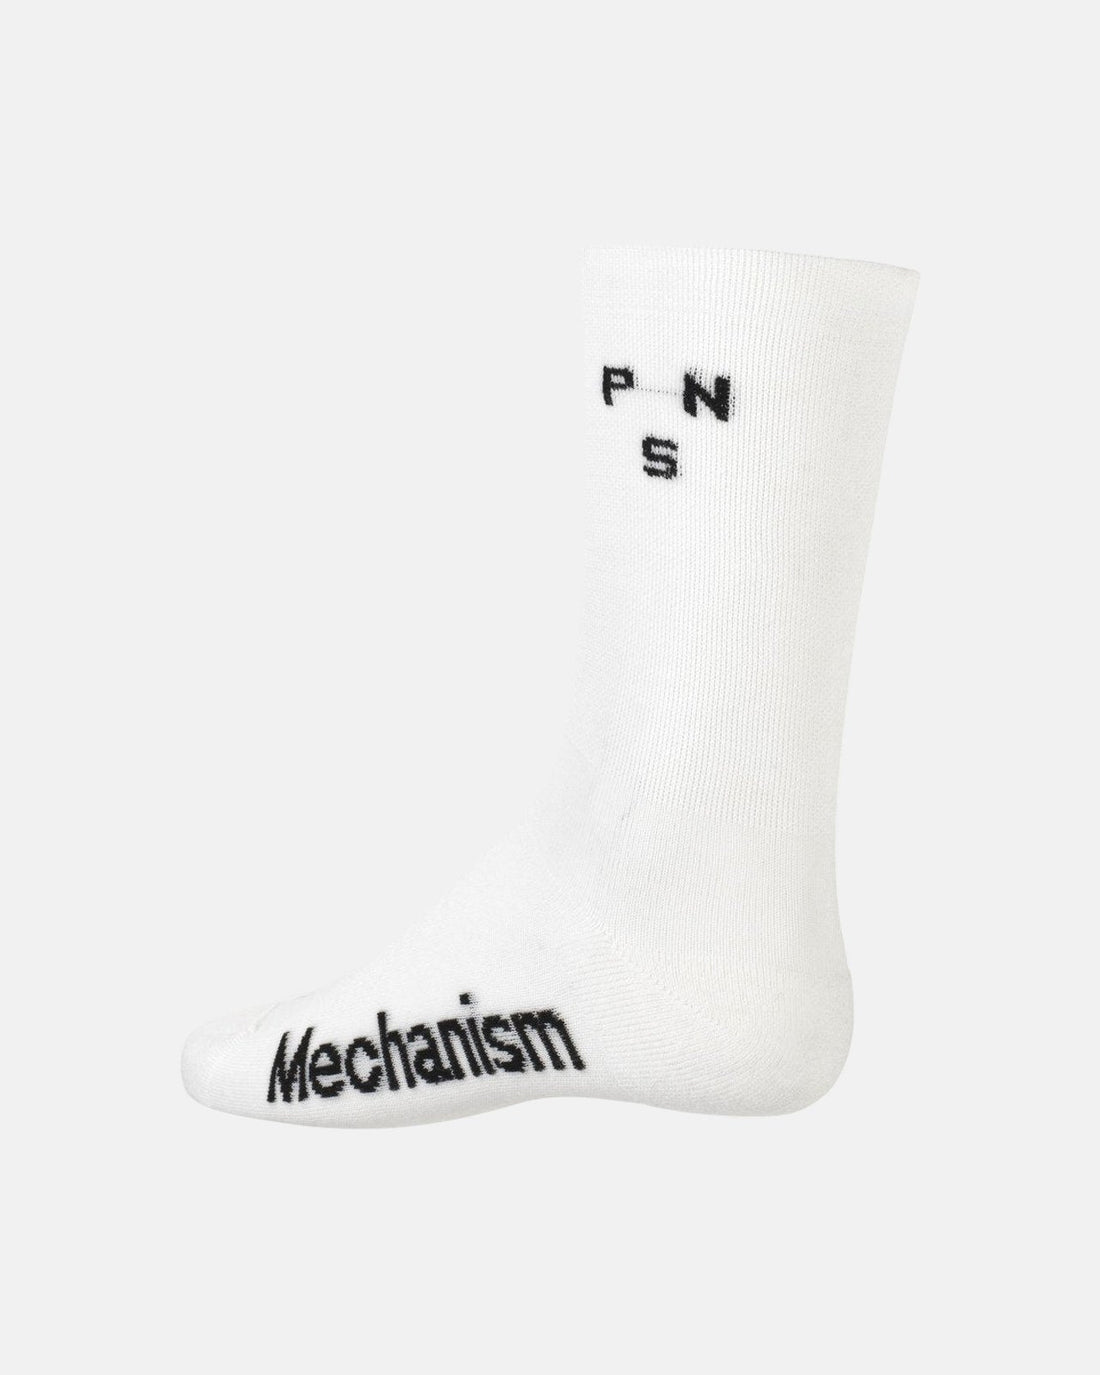 Mechanism Thermal Socks - White